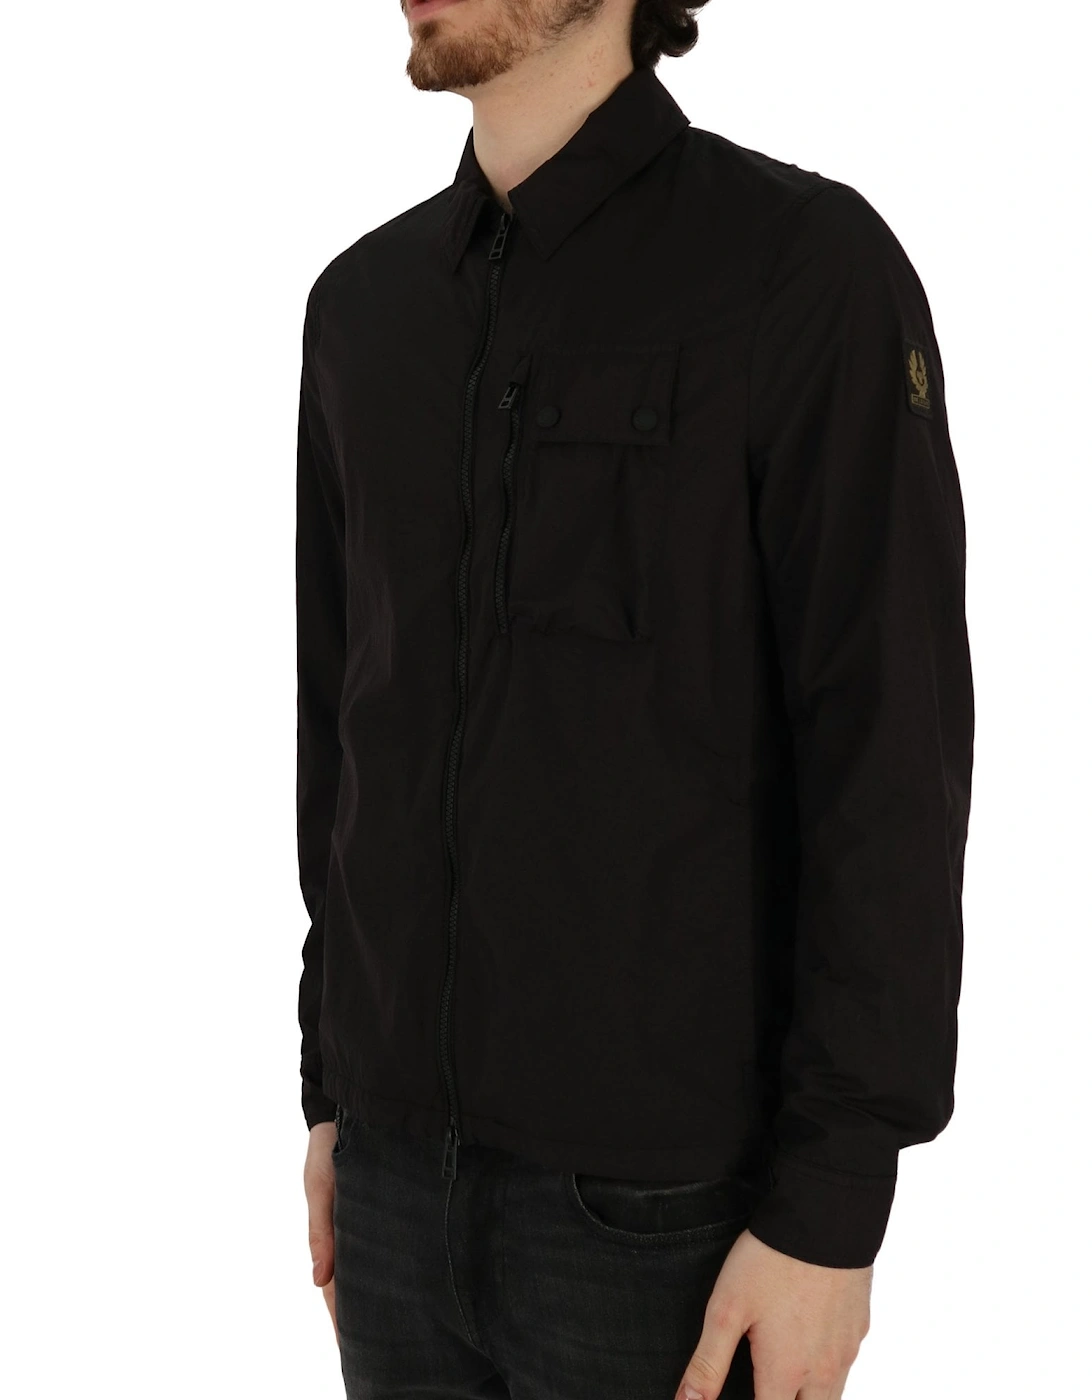 Rail Black Overshirt Jacket